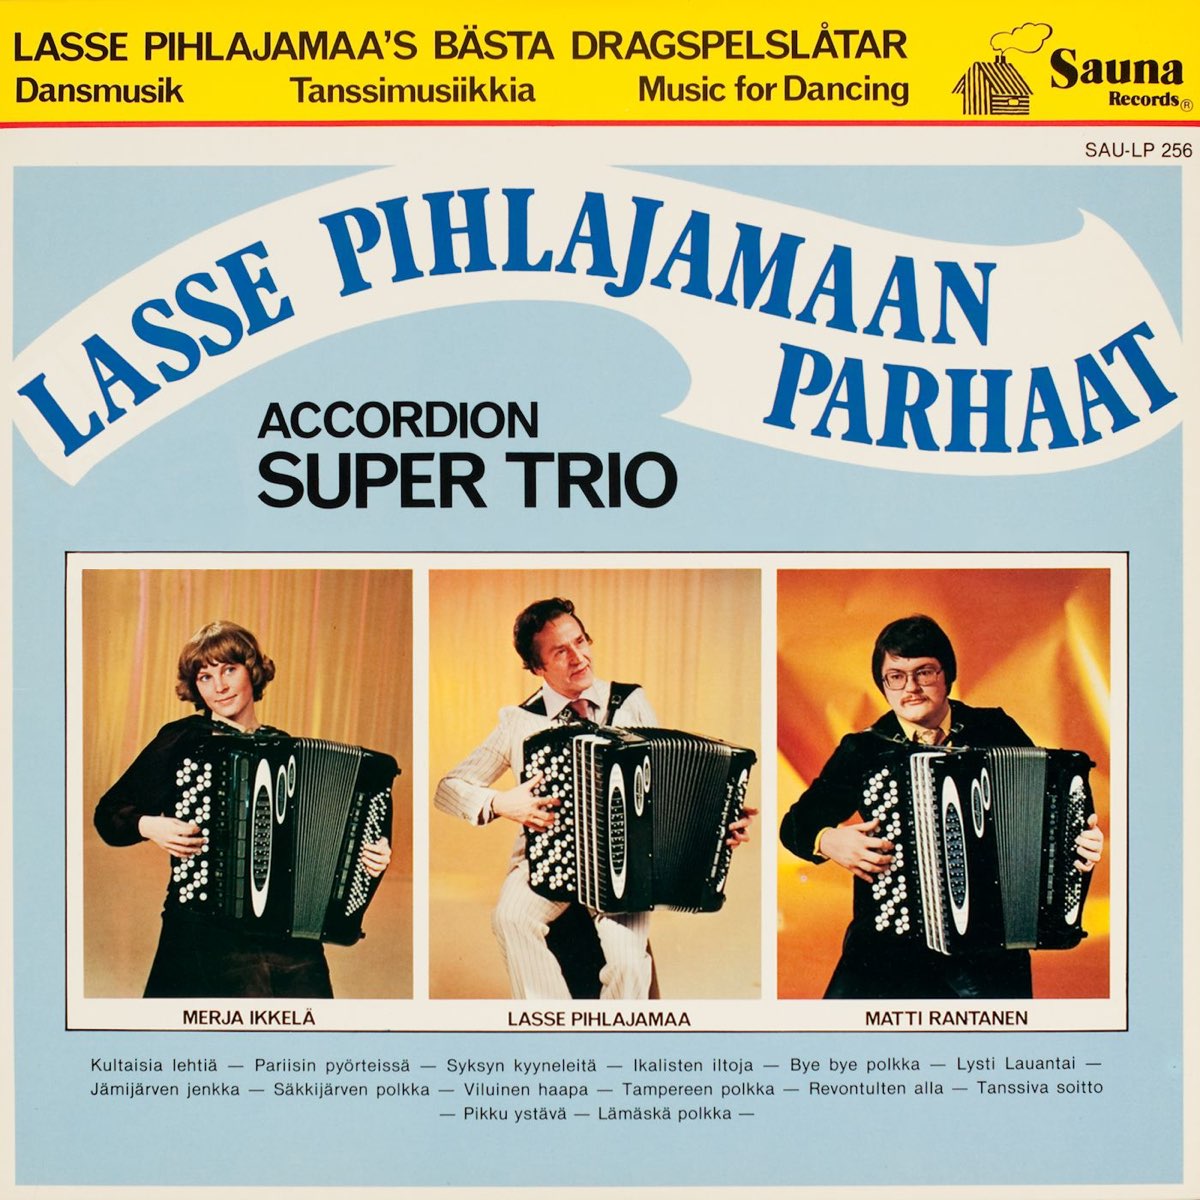 Parhaat by Lasse Pihlajamaa on Apple Music